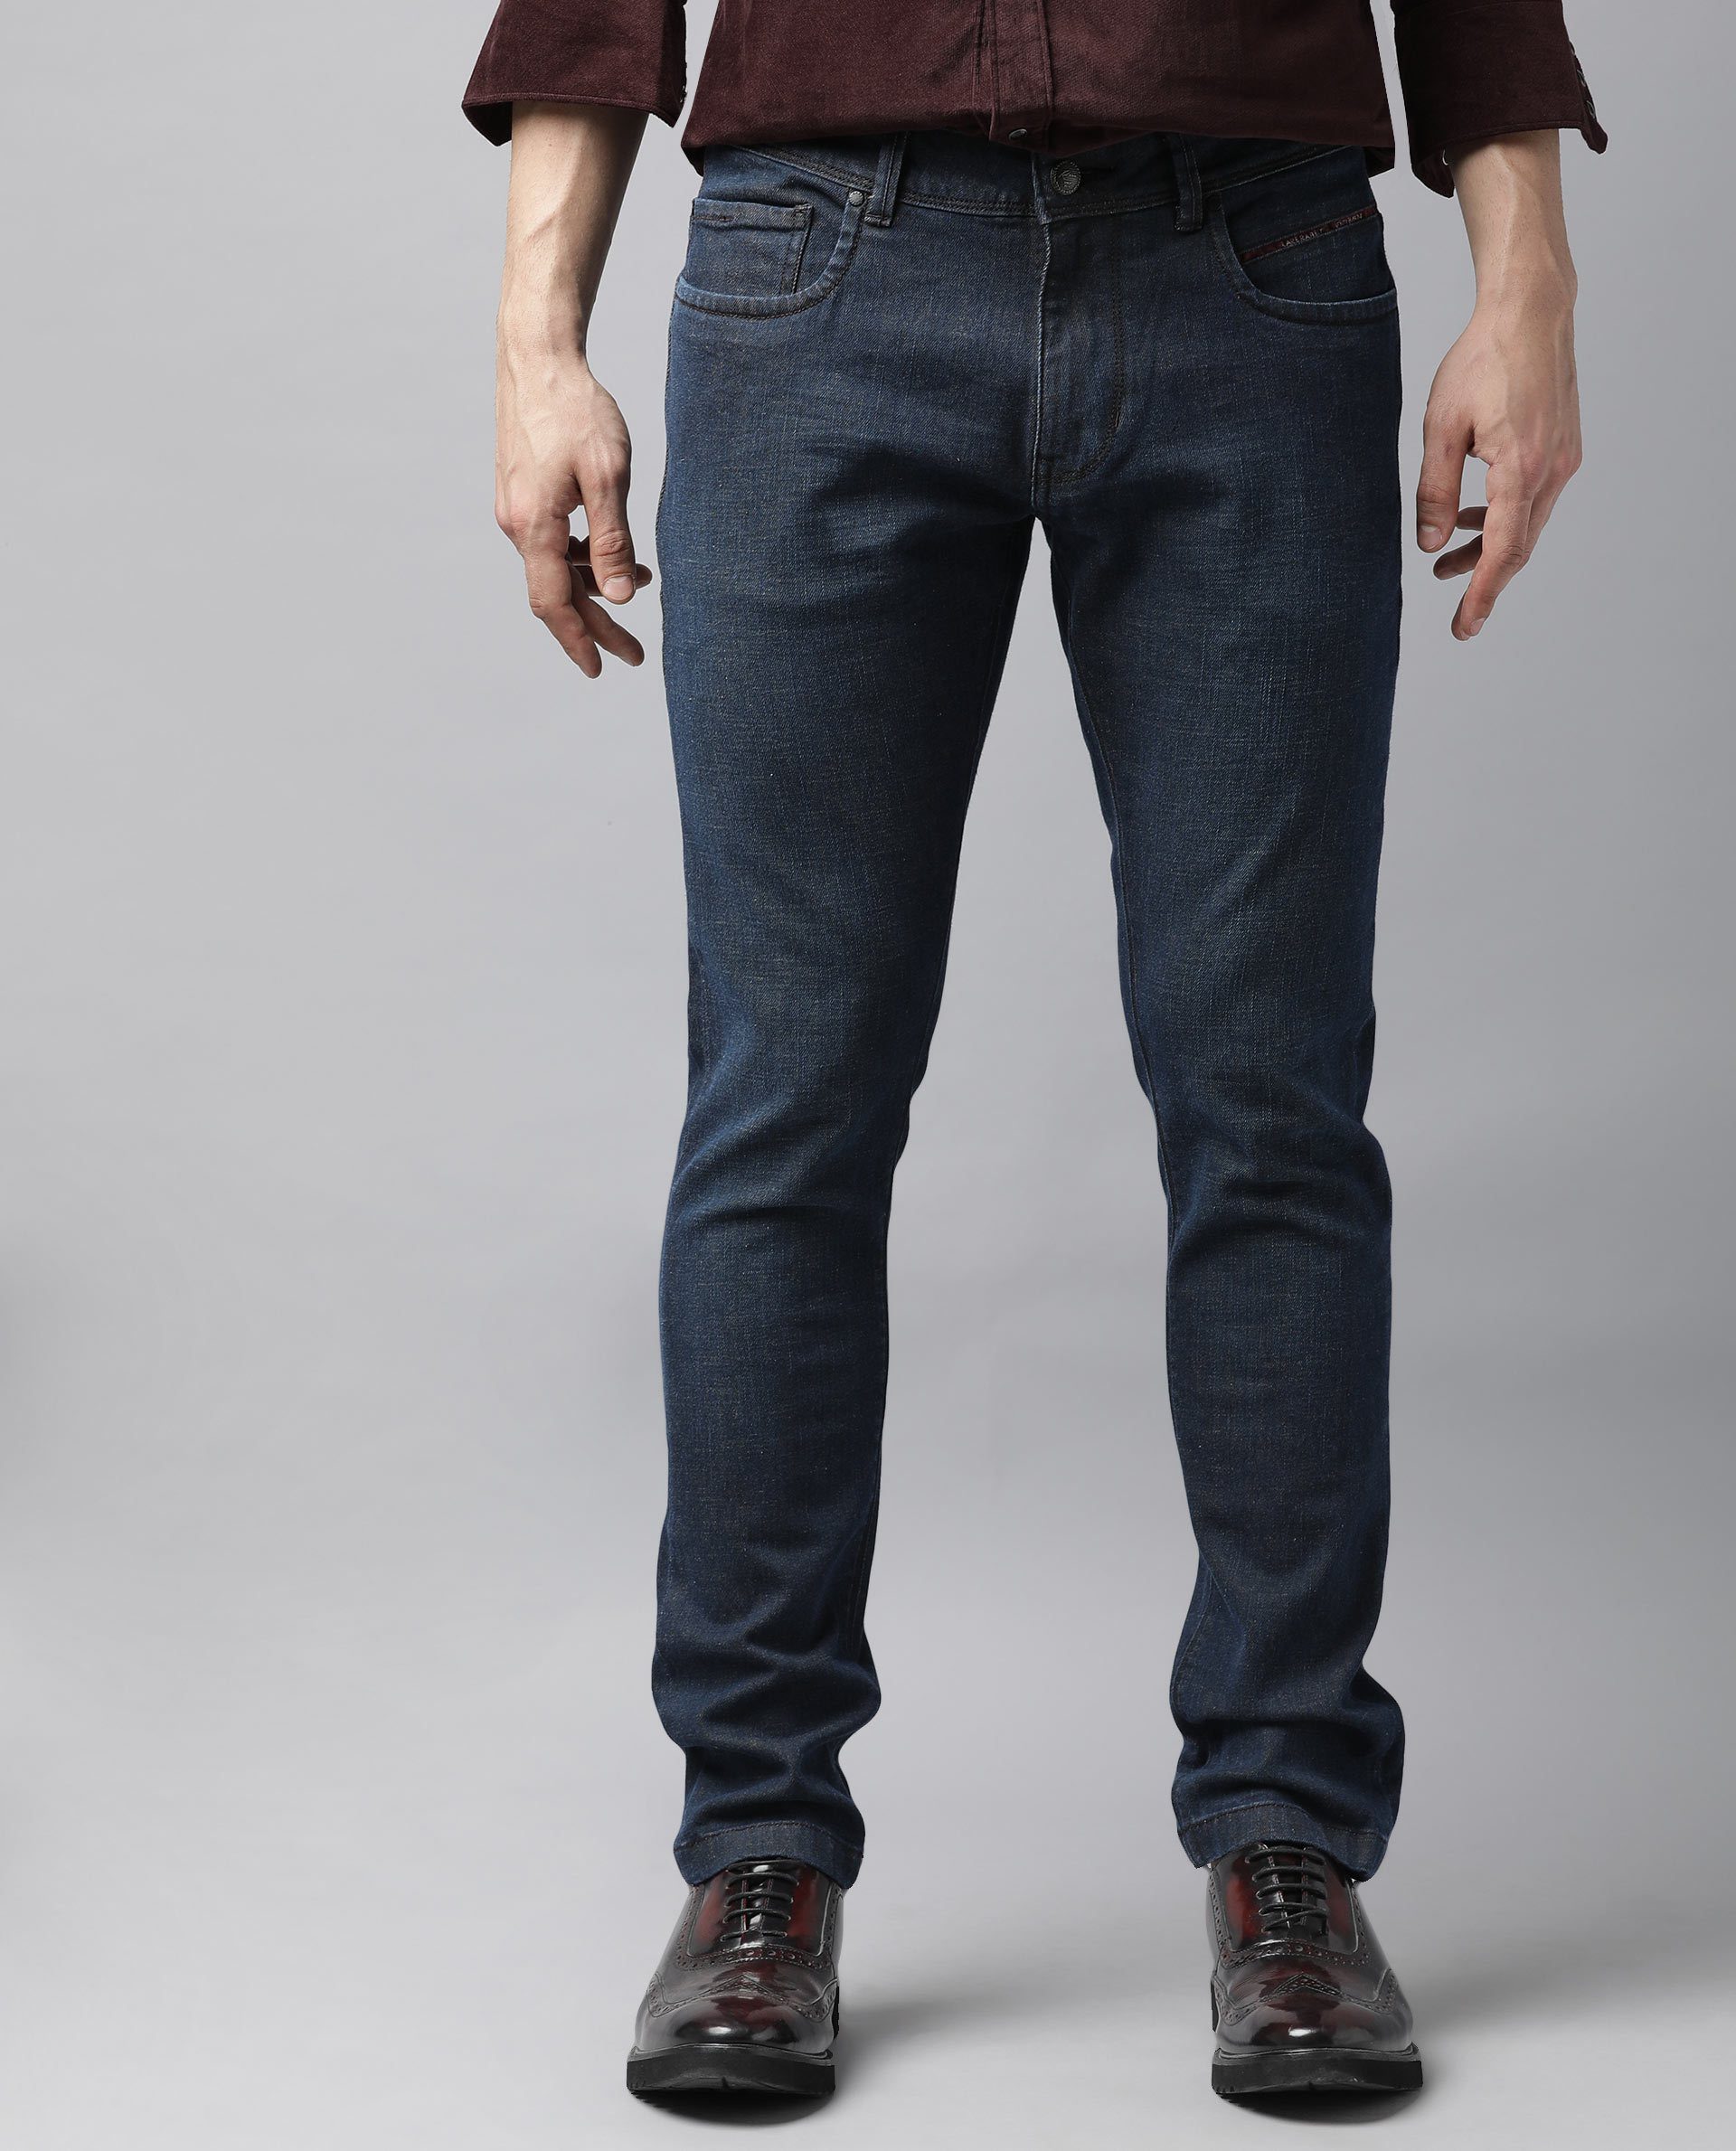 Jonas Comfort Fit Denim Navy Blue Jeans For Men